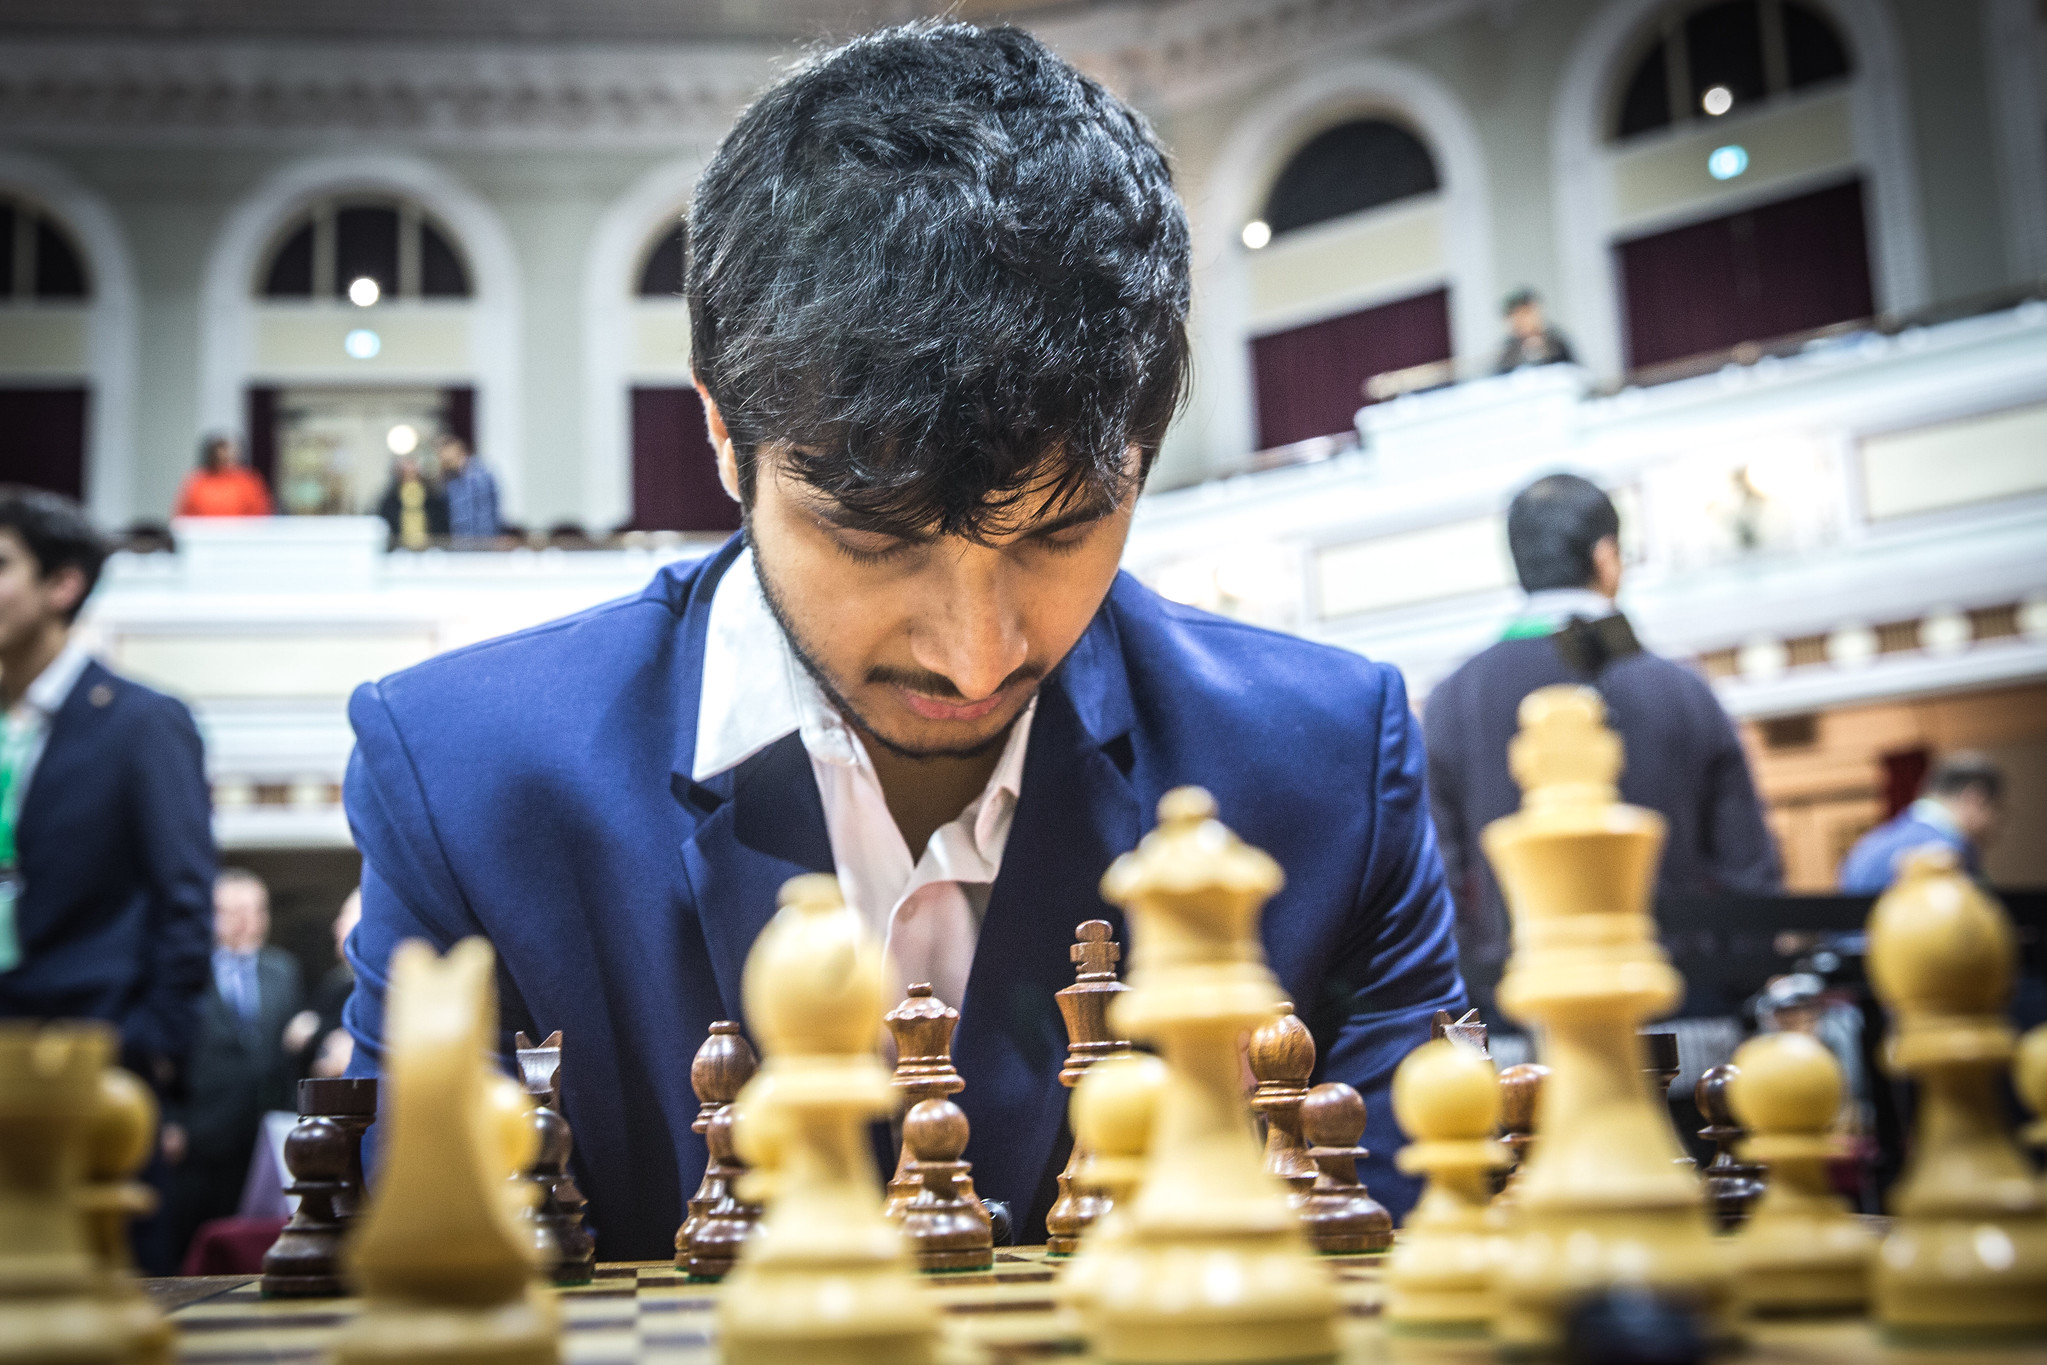 FIDE Grand Swiss 2023: Vaishali Plays Brilliancy As Anna